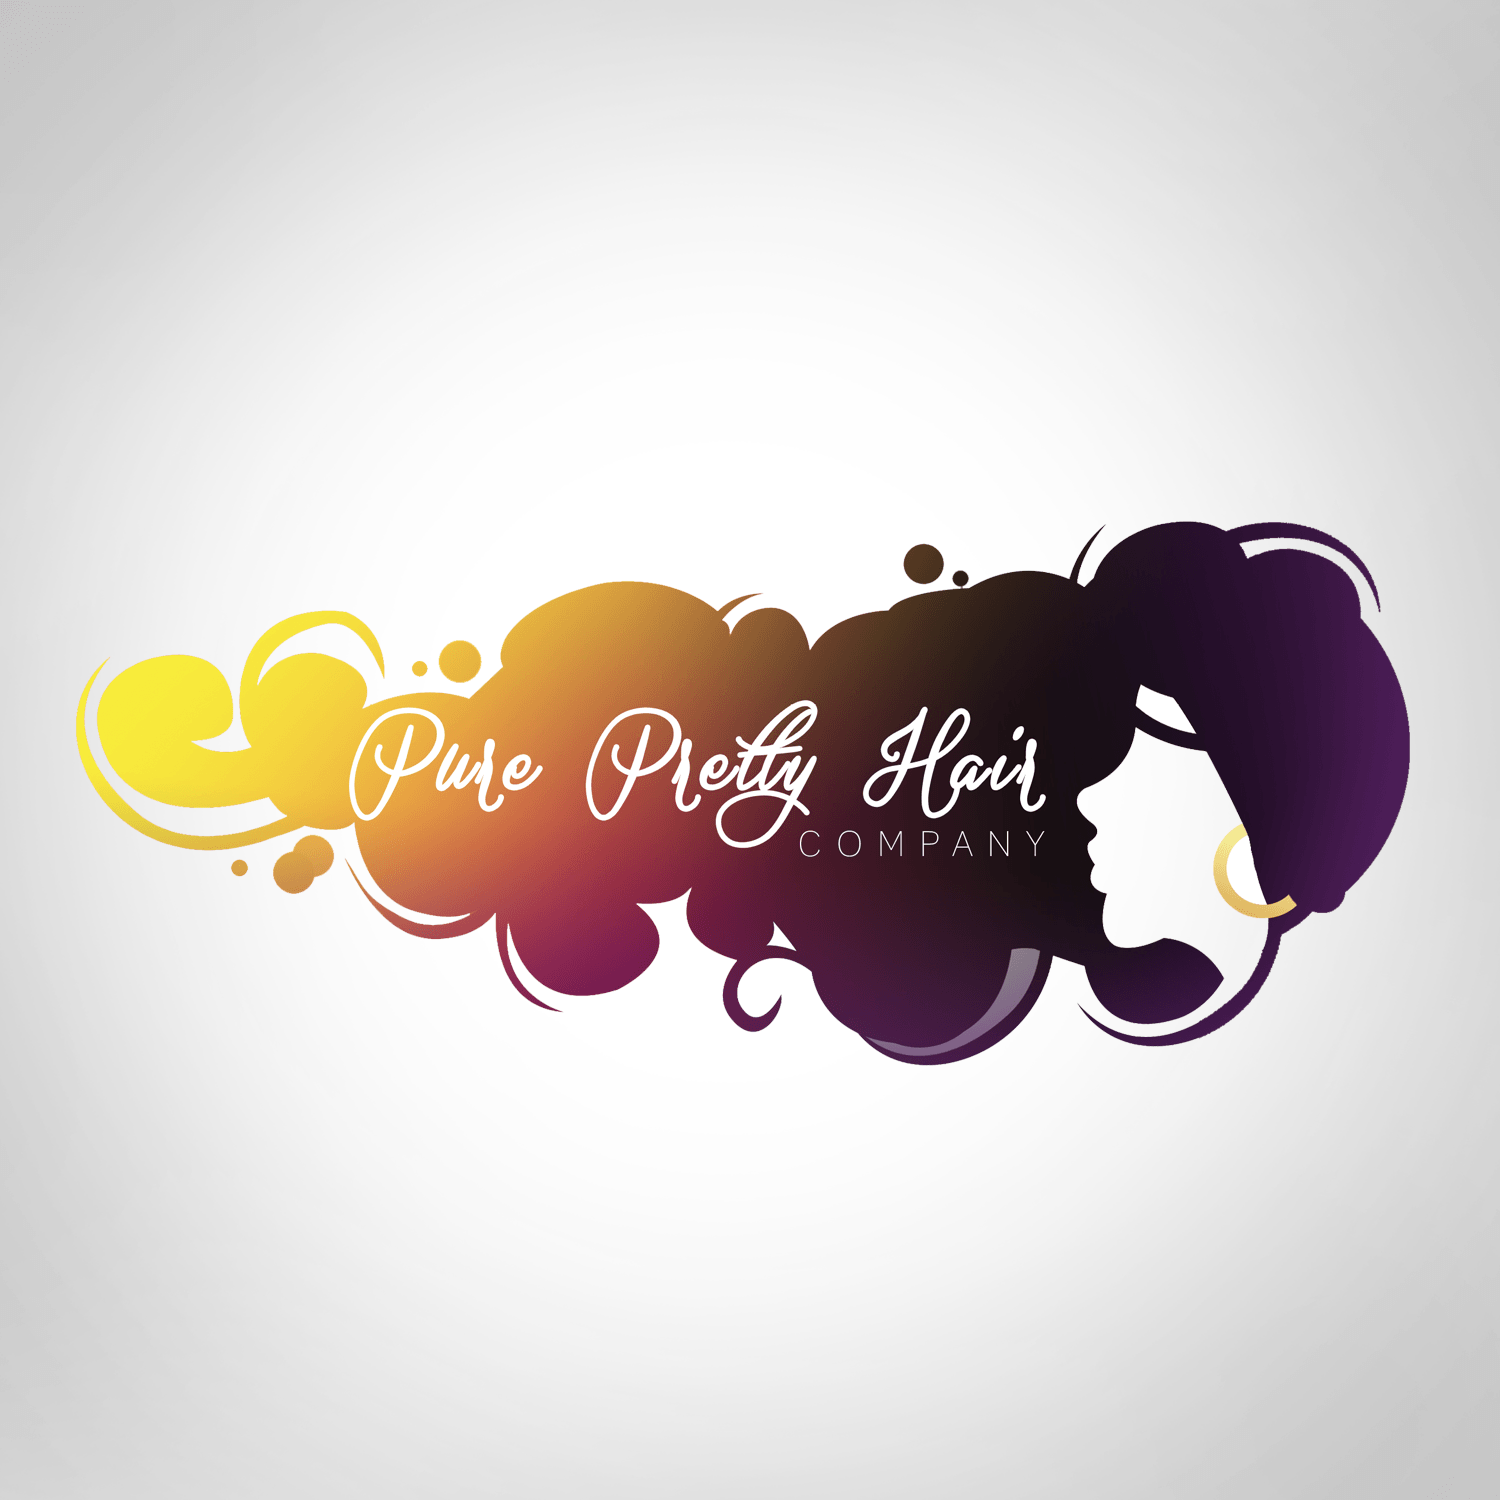 Hair Company Logo - Logo Design for Pure Pretty Hair Company #logo #design #business ...